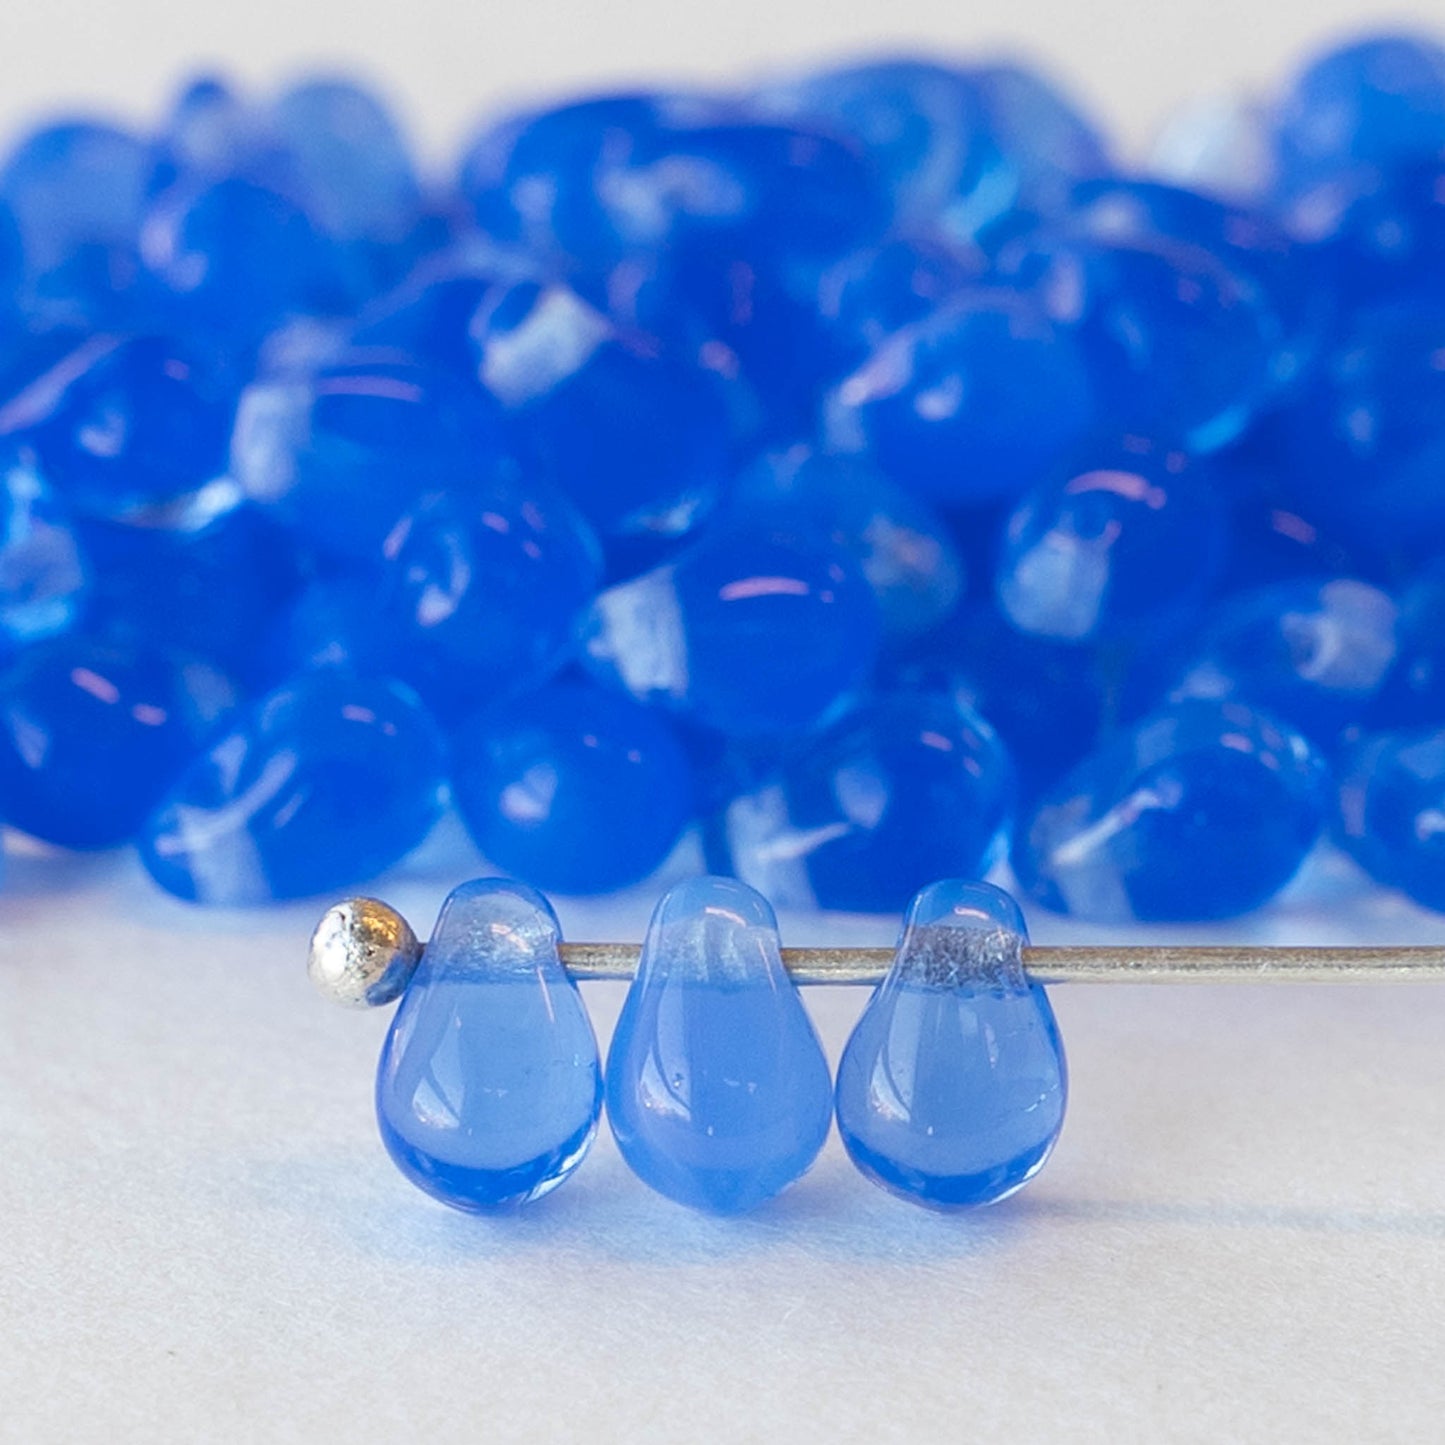 4x6mm Glass Teardrop Beads - Blue Opaline - 100 Beads